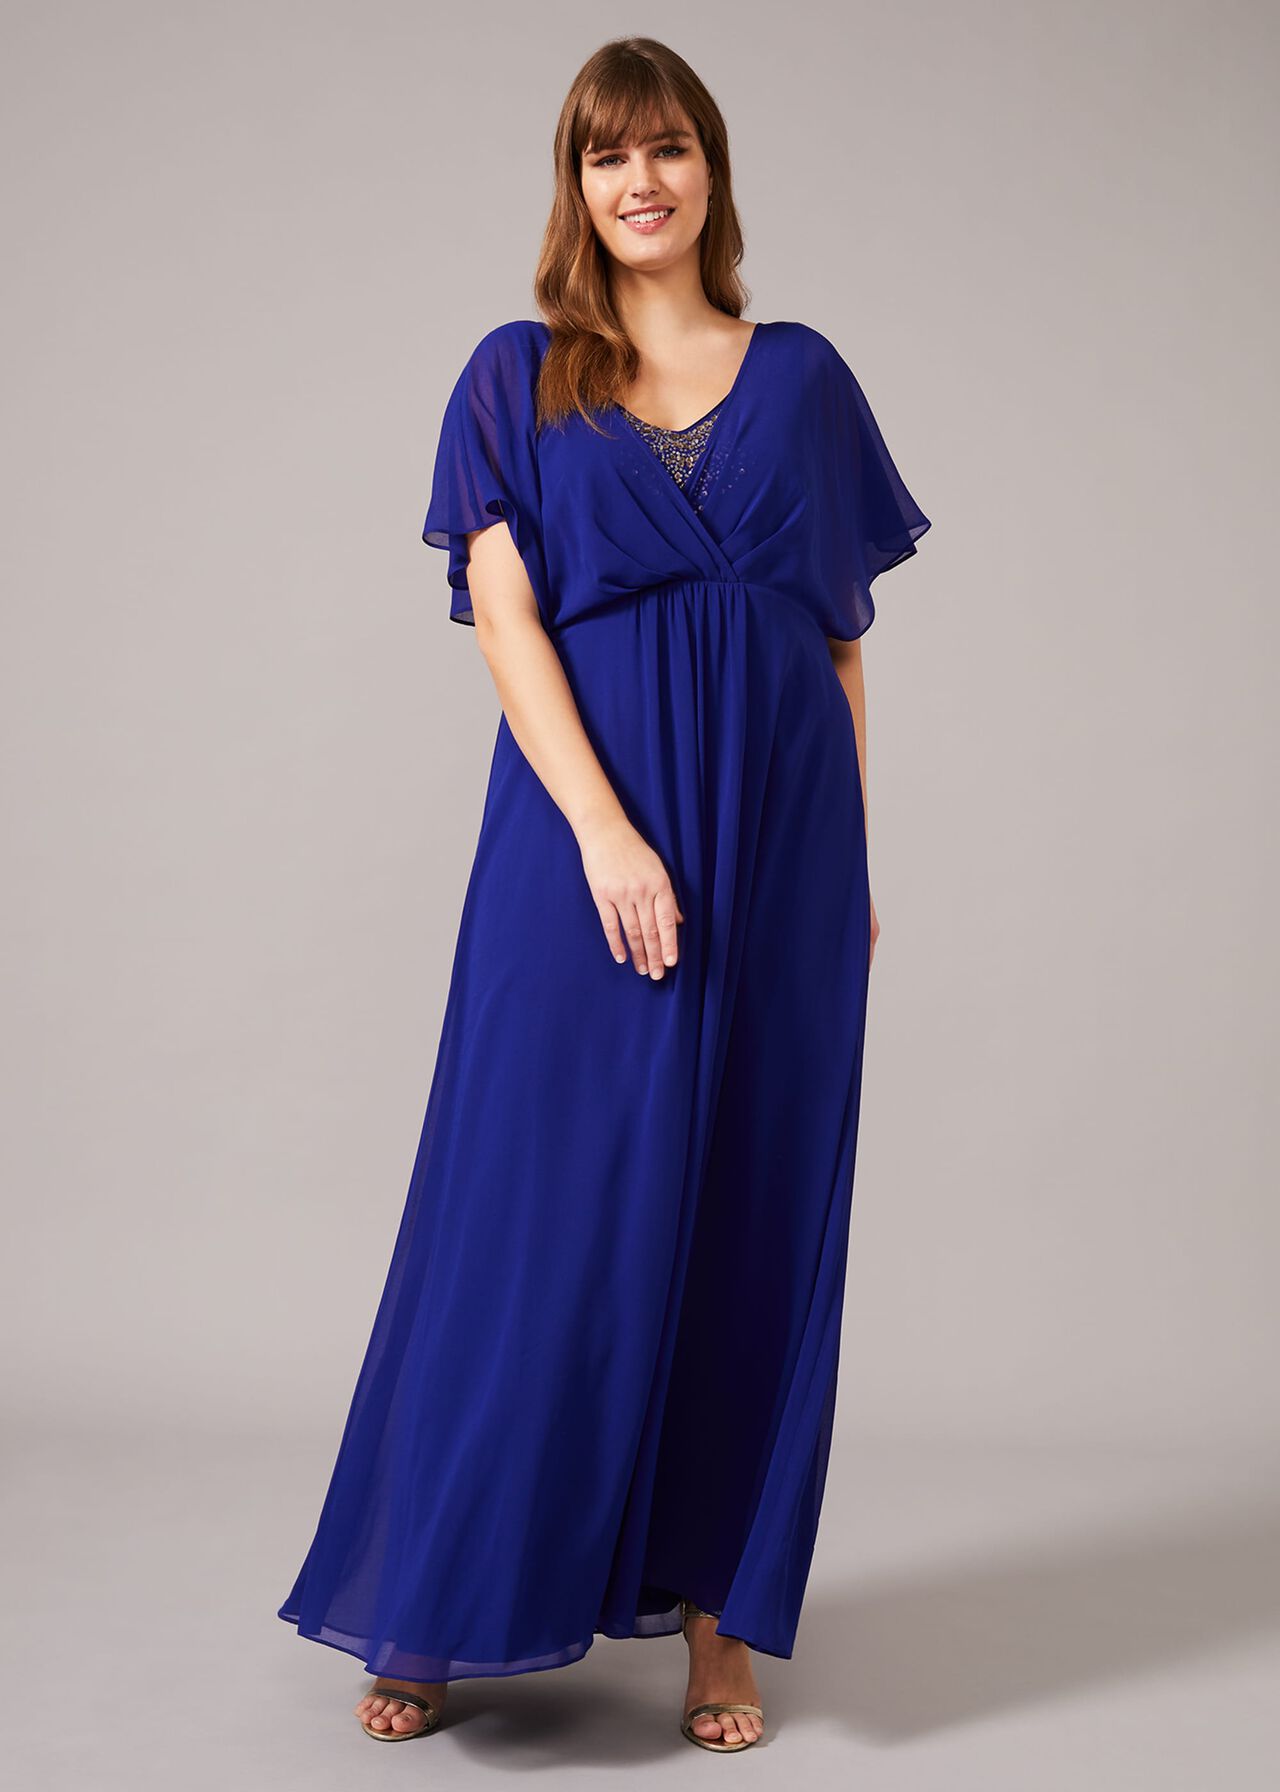 Albertina Sequin Maxi Dress | Phase Eight UK